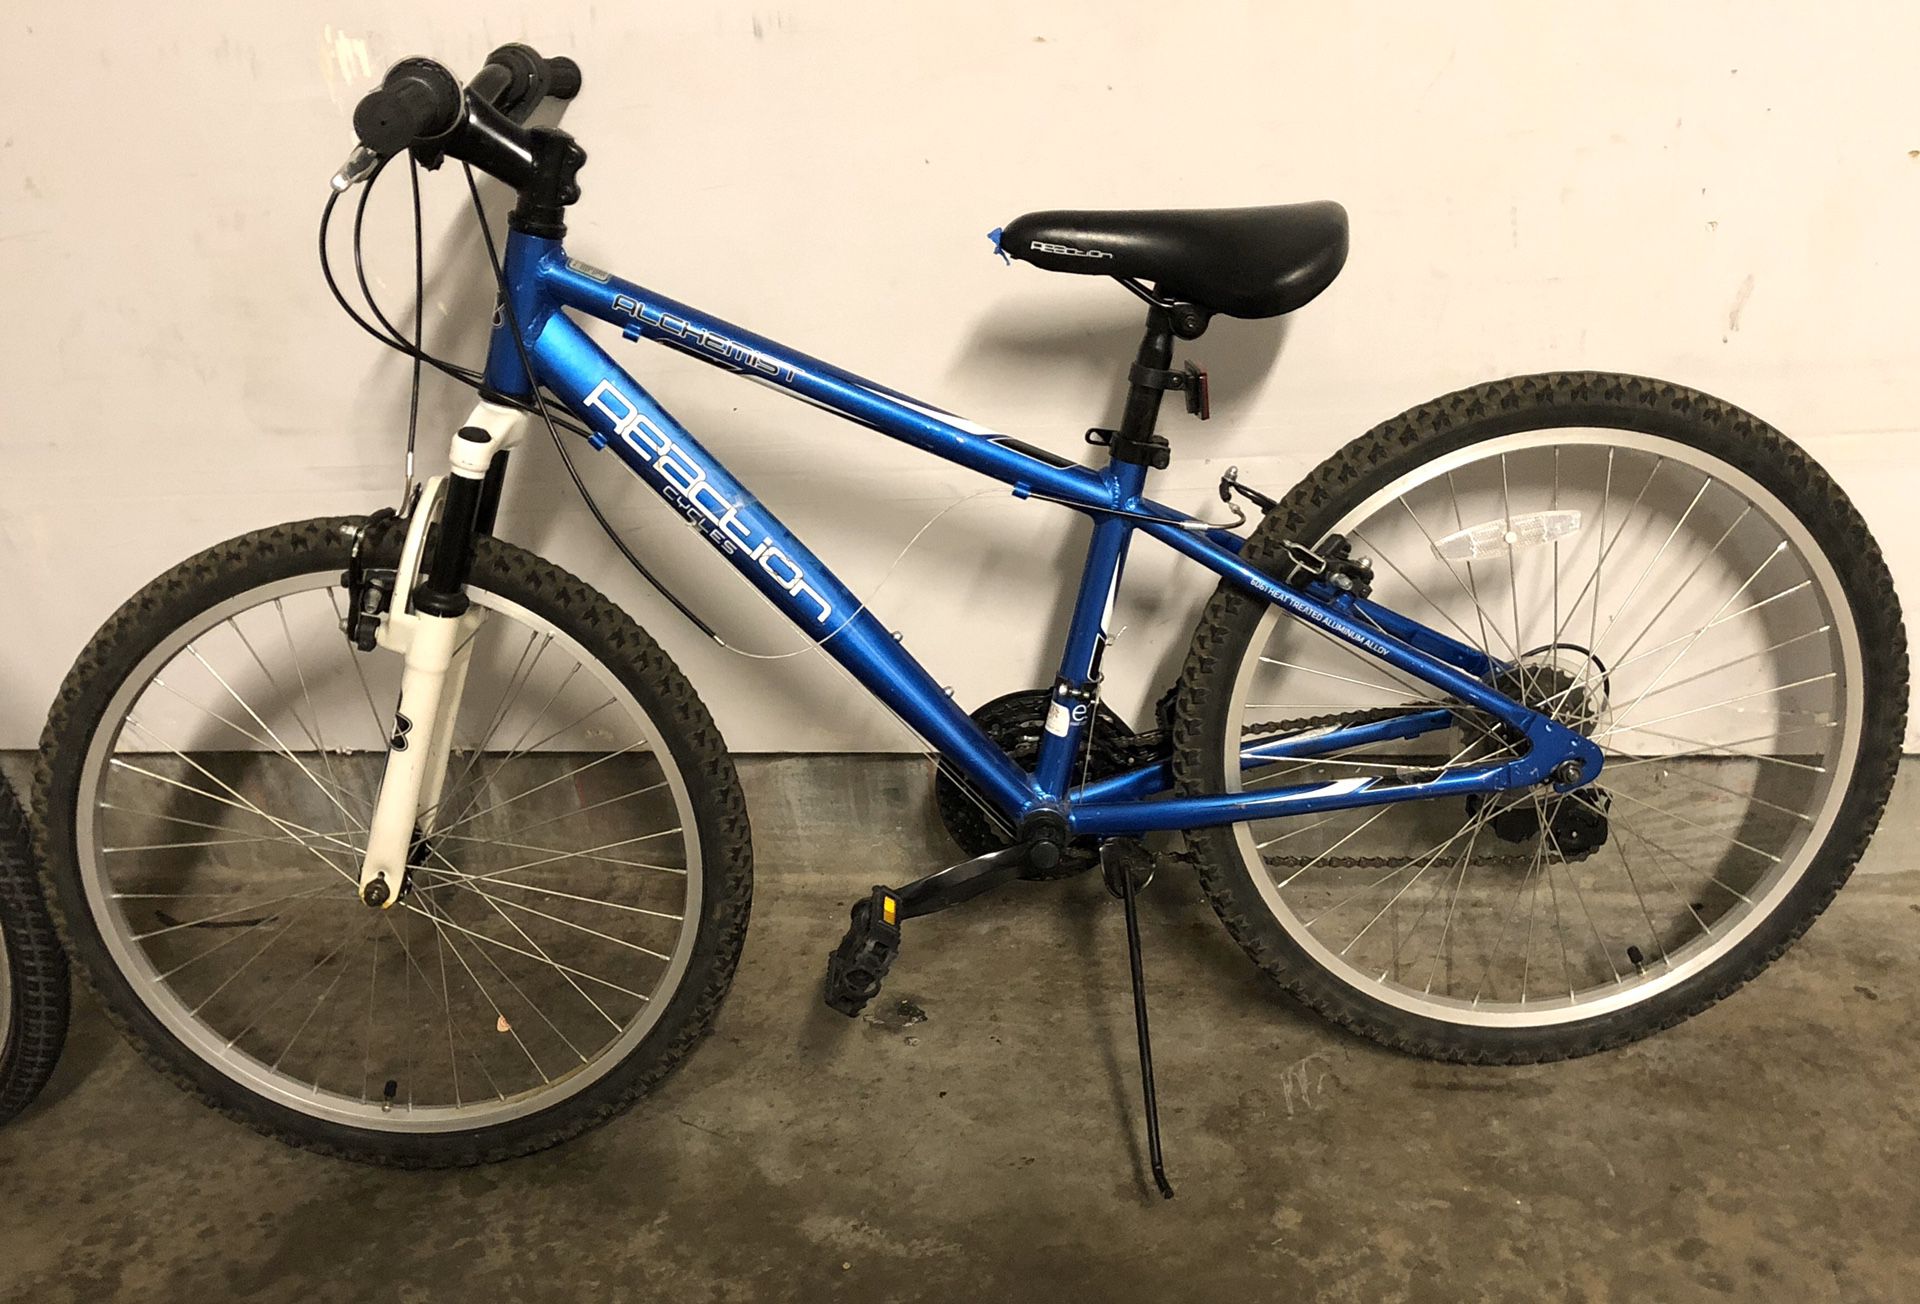 Used bike for $45